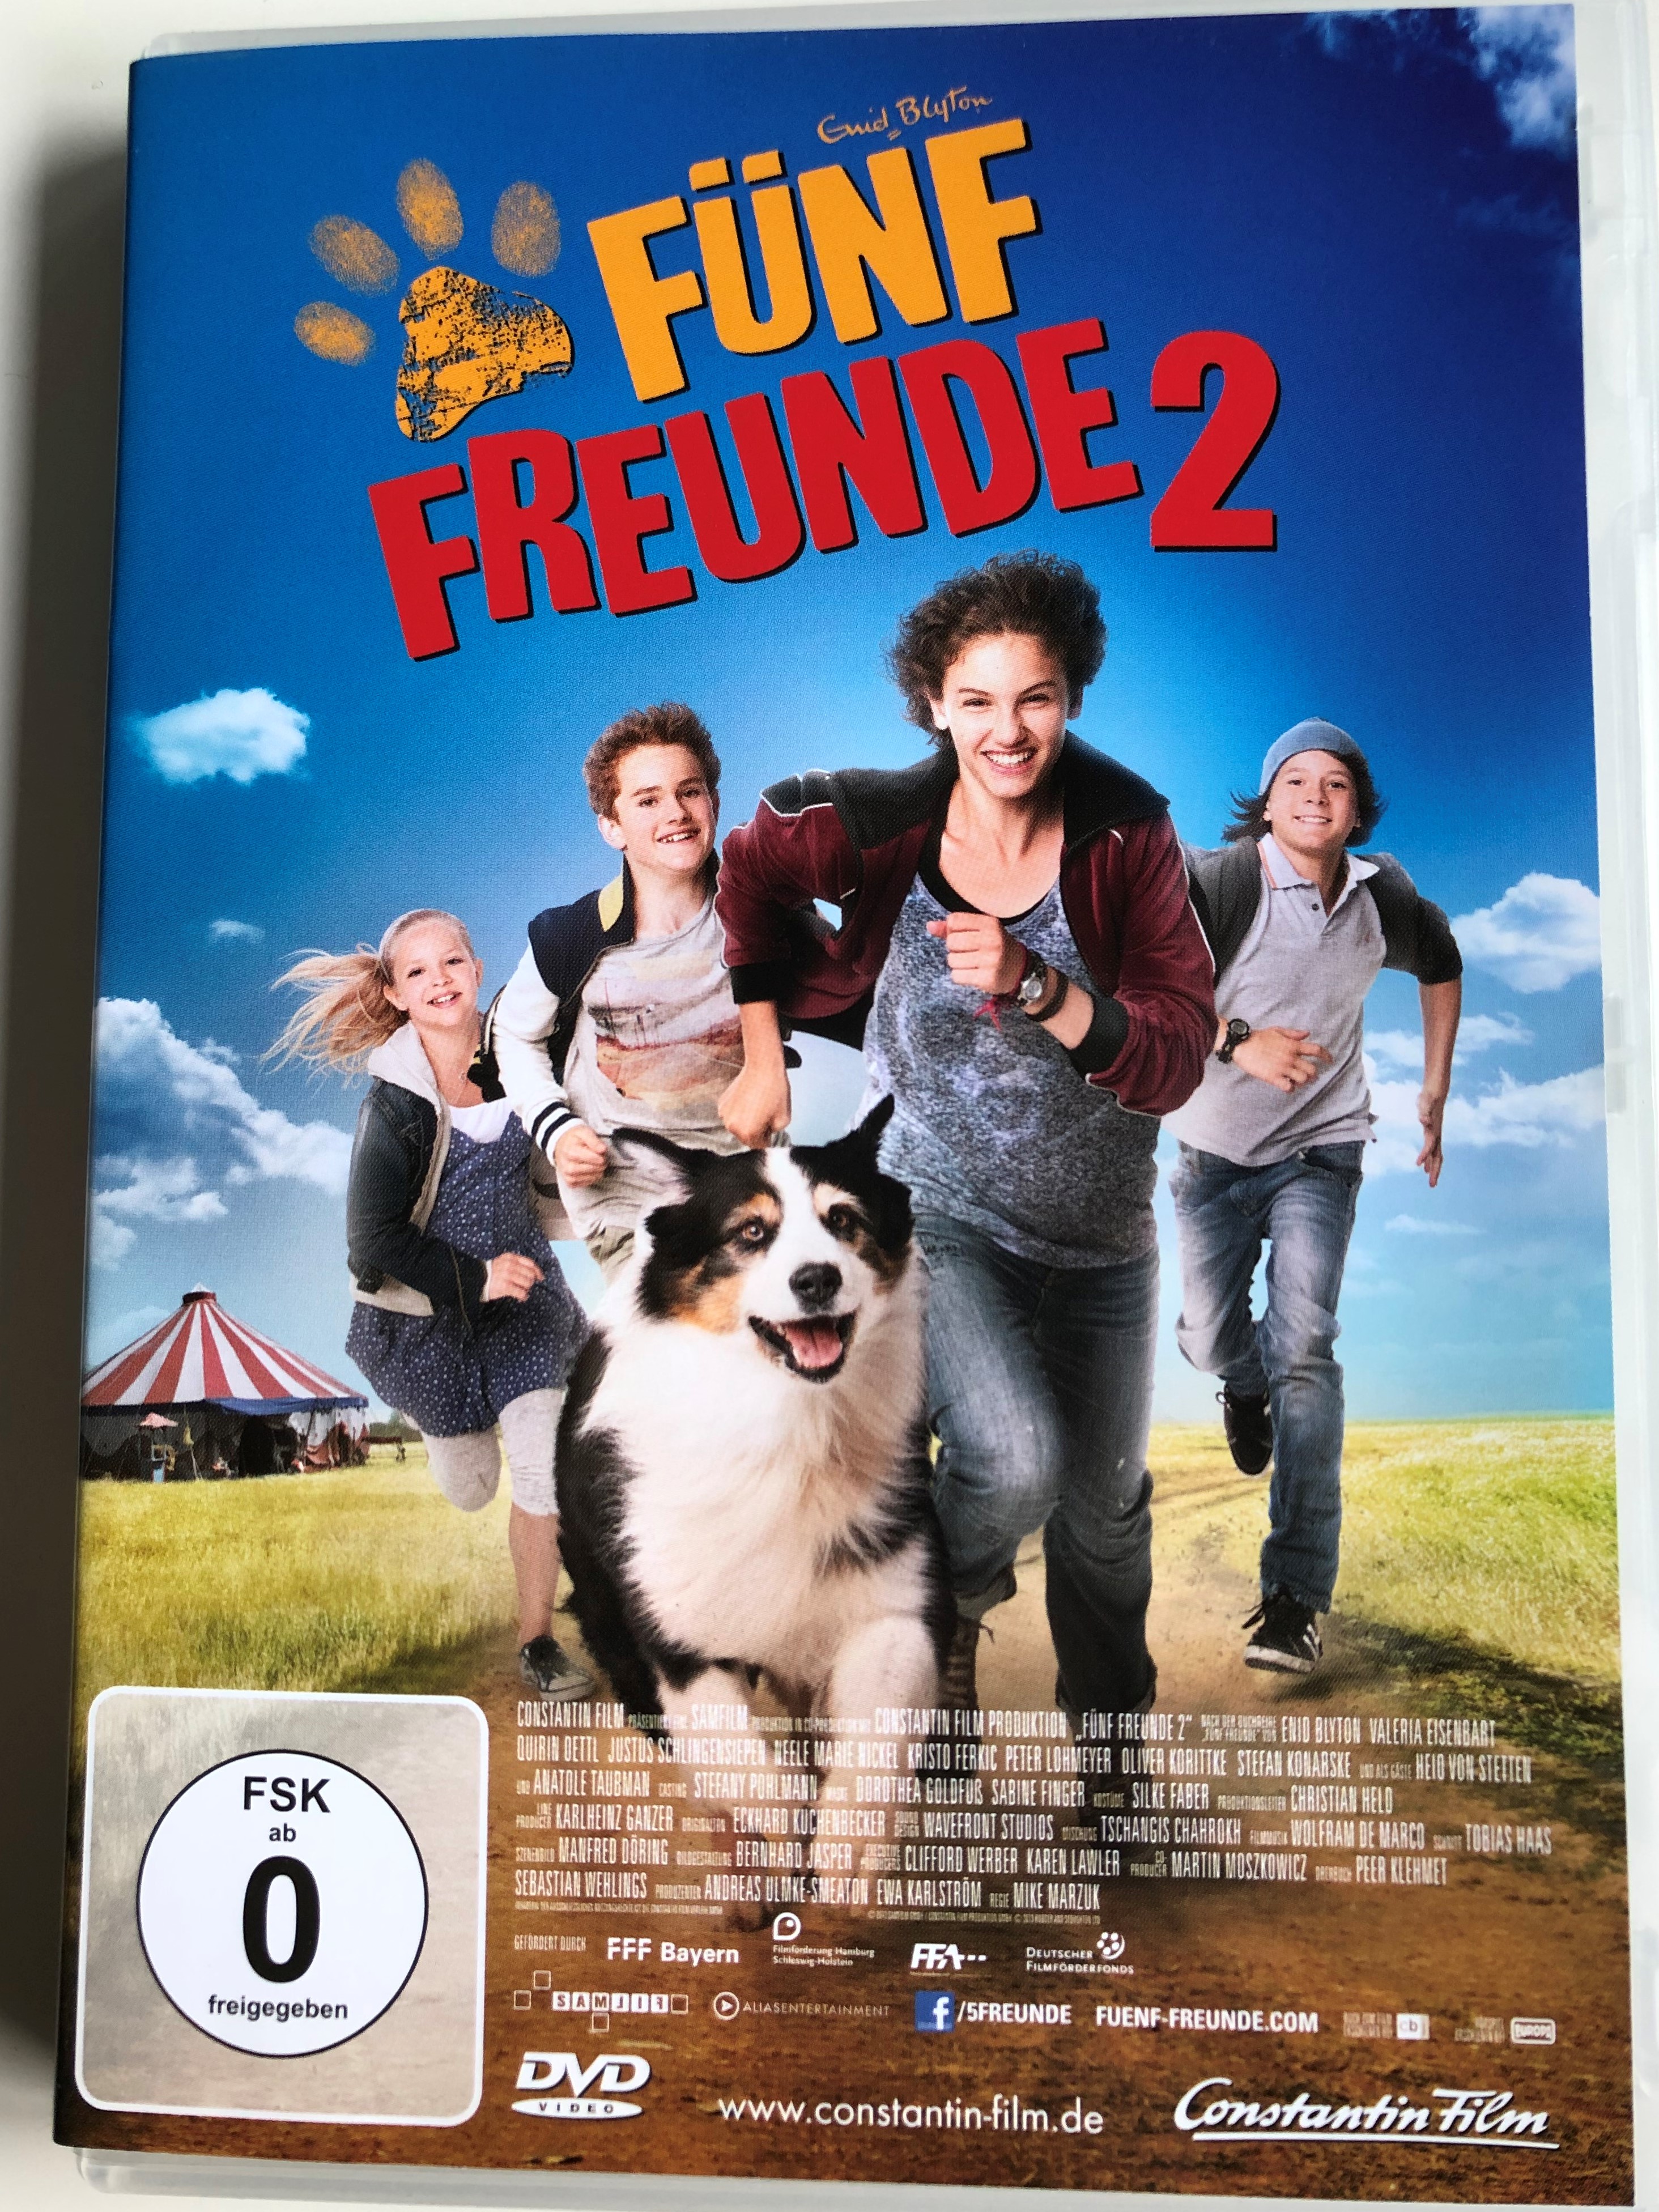 f-nf-freunde-2-dvd-2013-famous-five-2-1.jpg